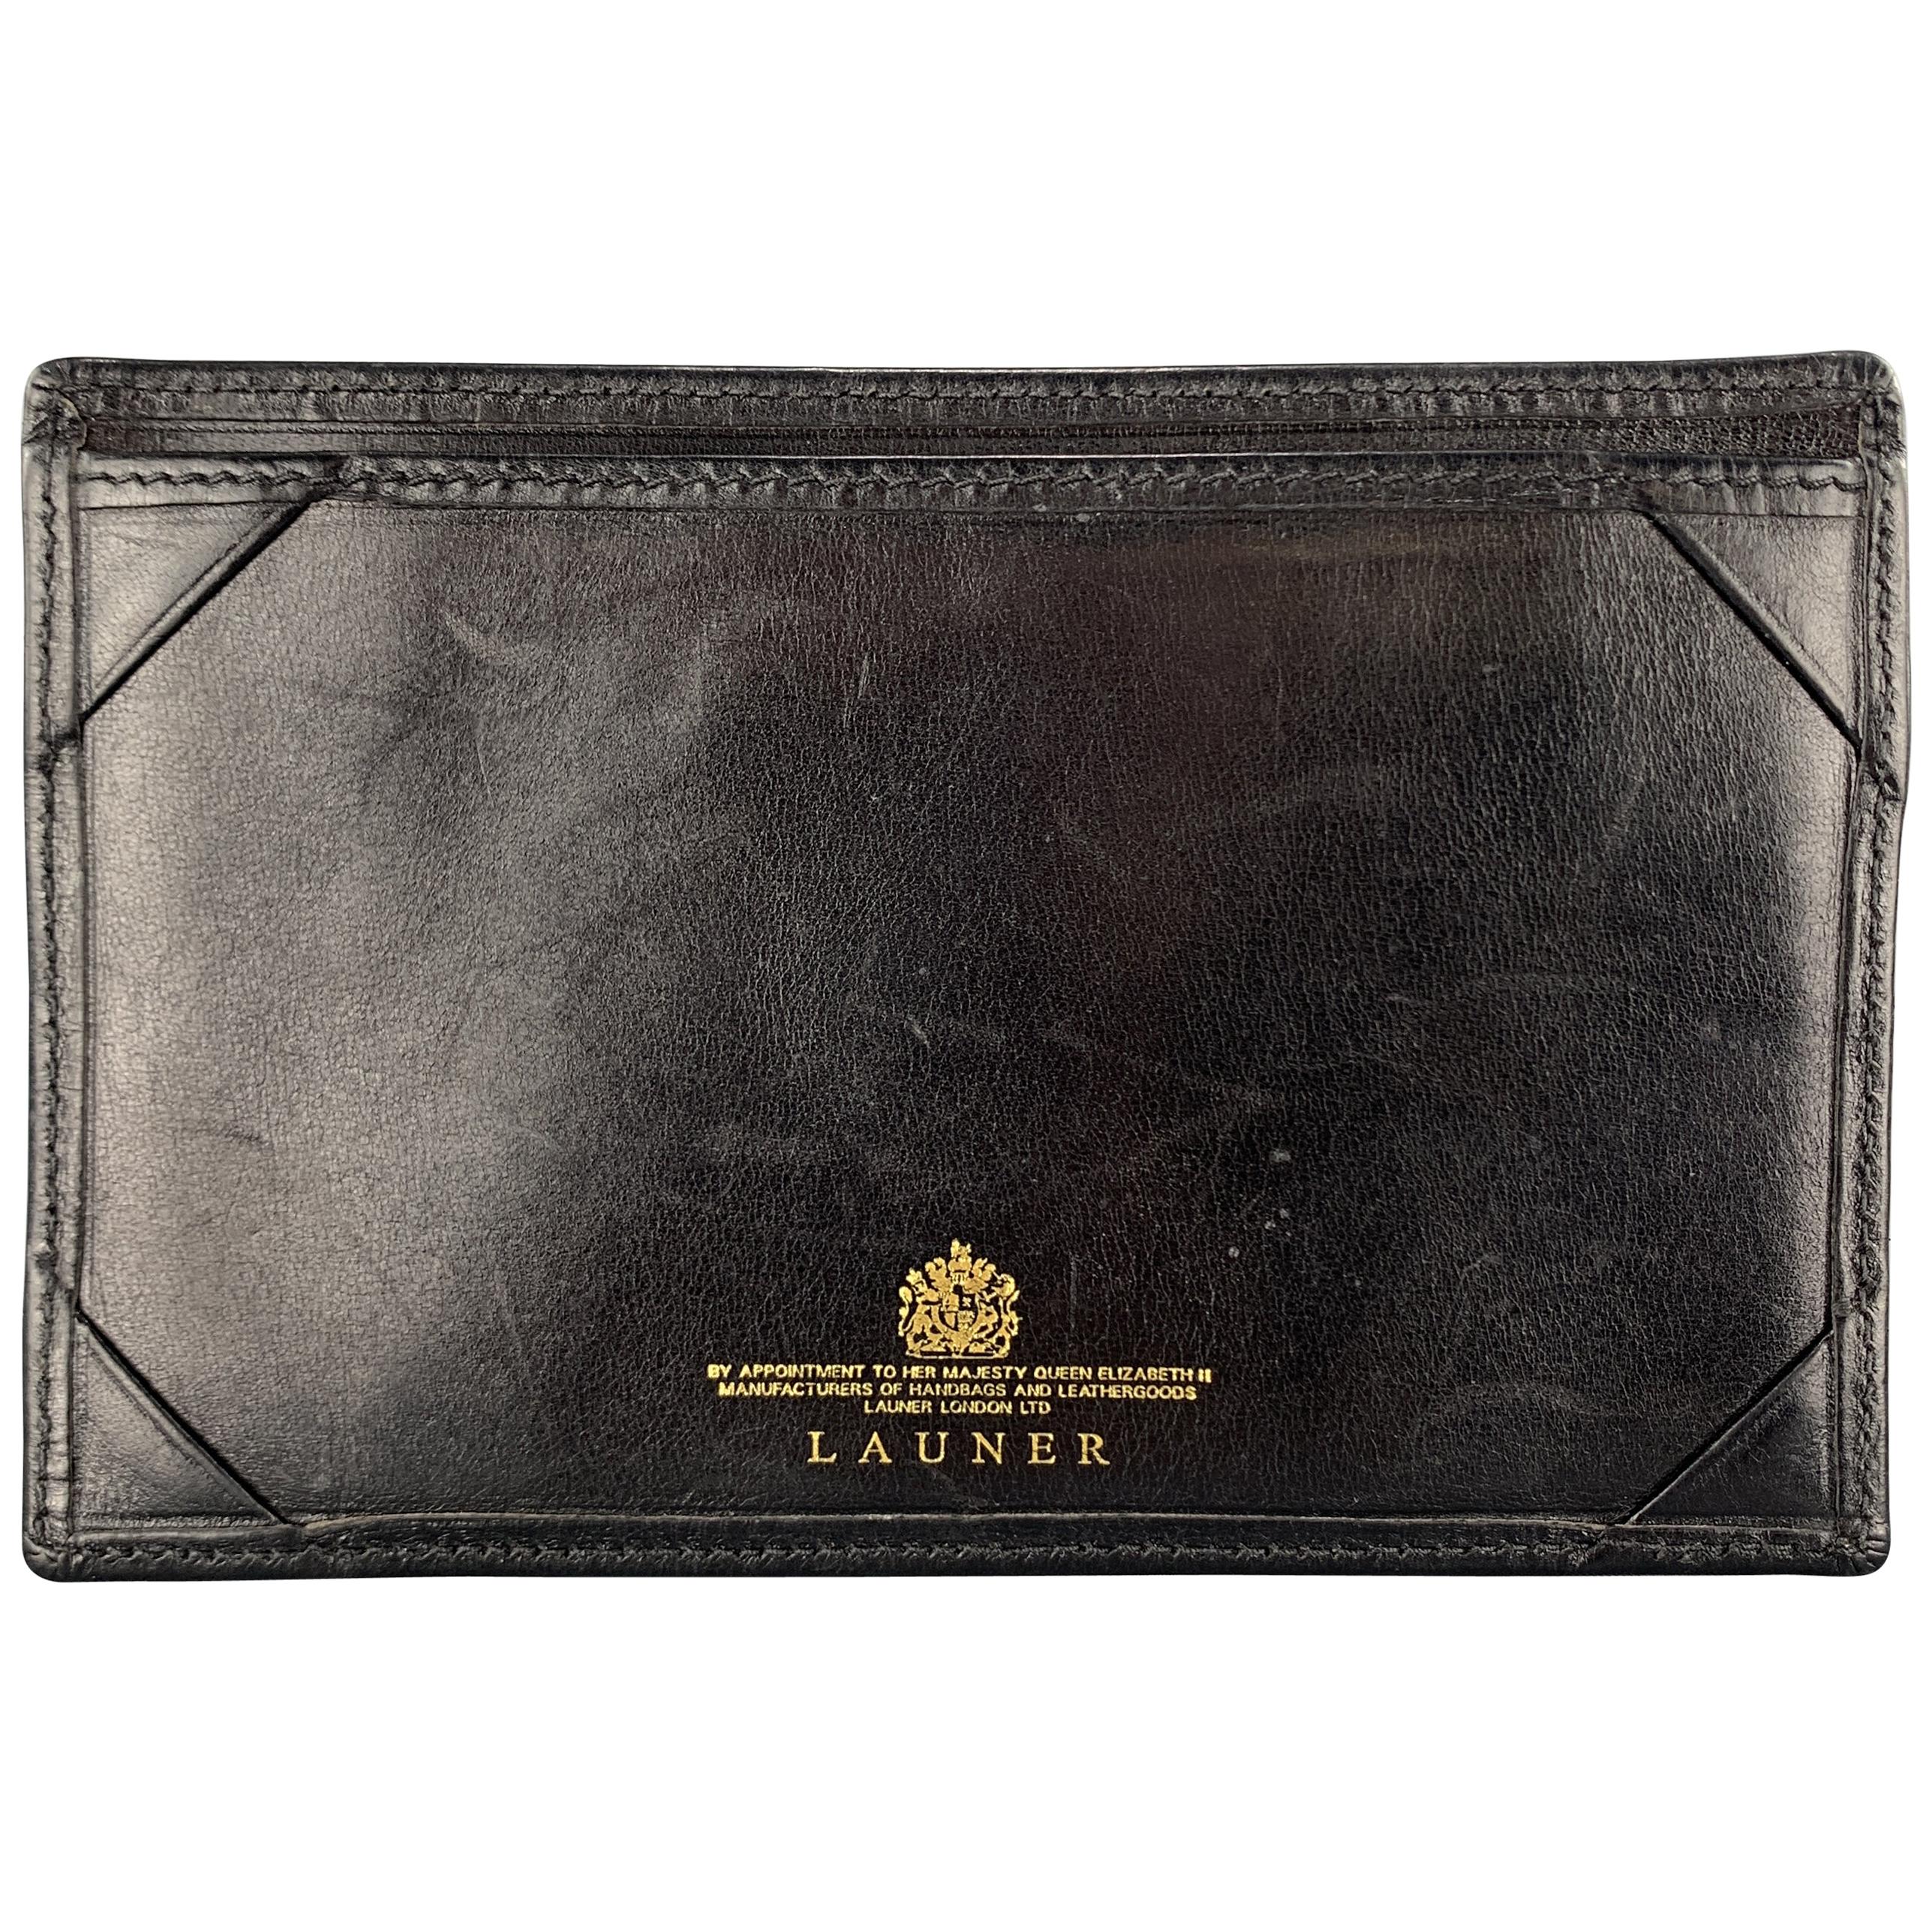 LAUNER Solid Black Leather Card Case Wallet